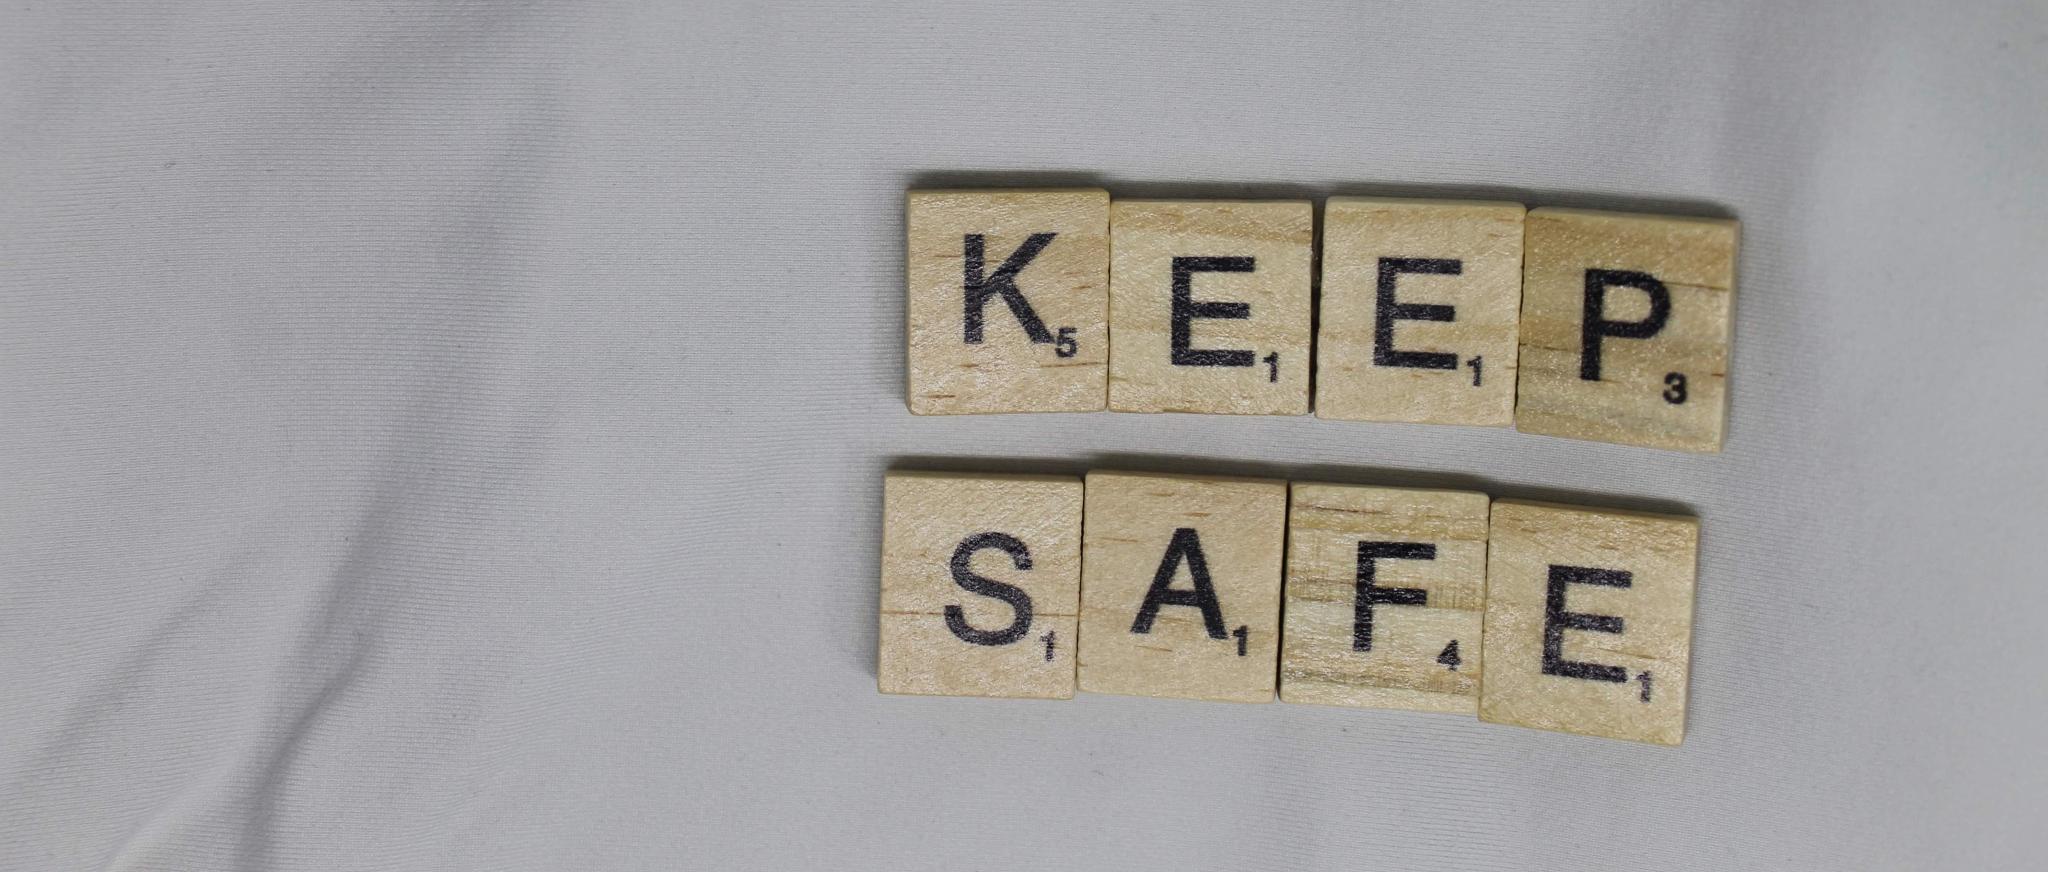 keep safe